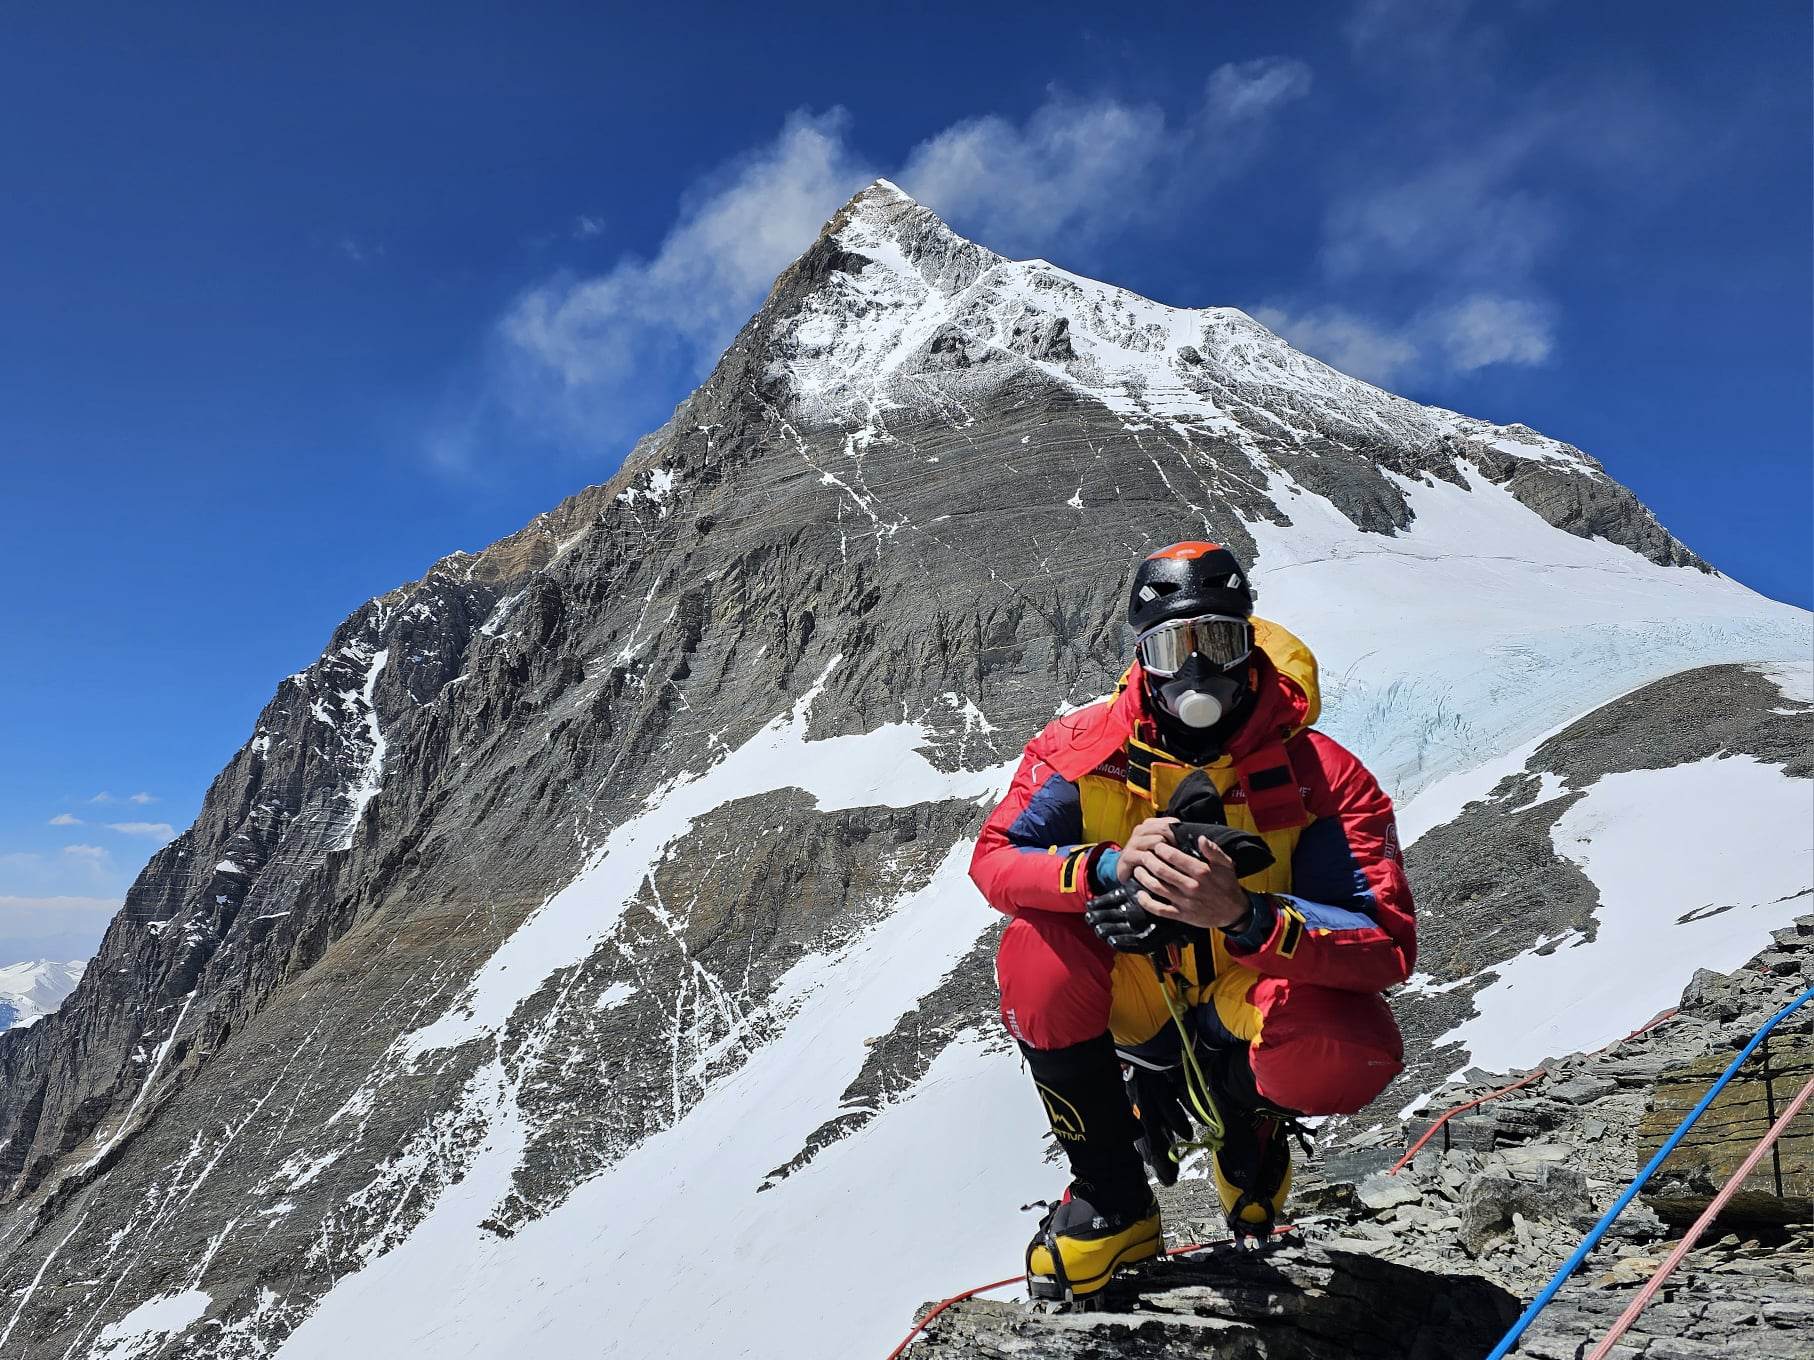 Szilárd Suhajda startet den Gipfelangriff auf den Mount Everest